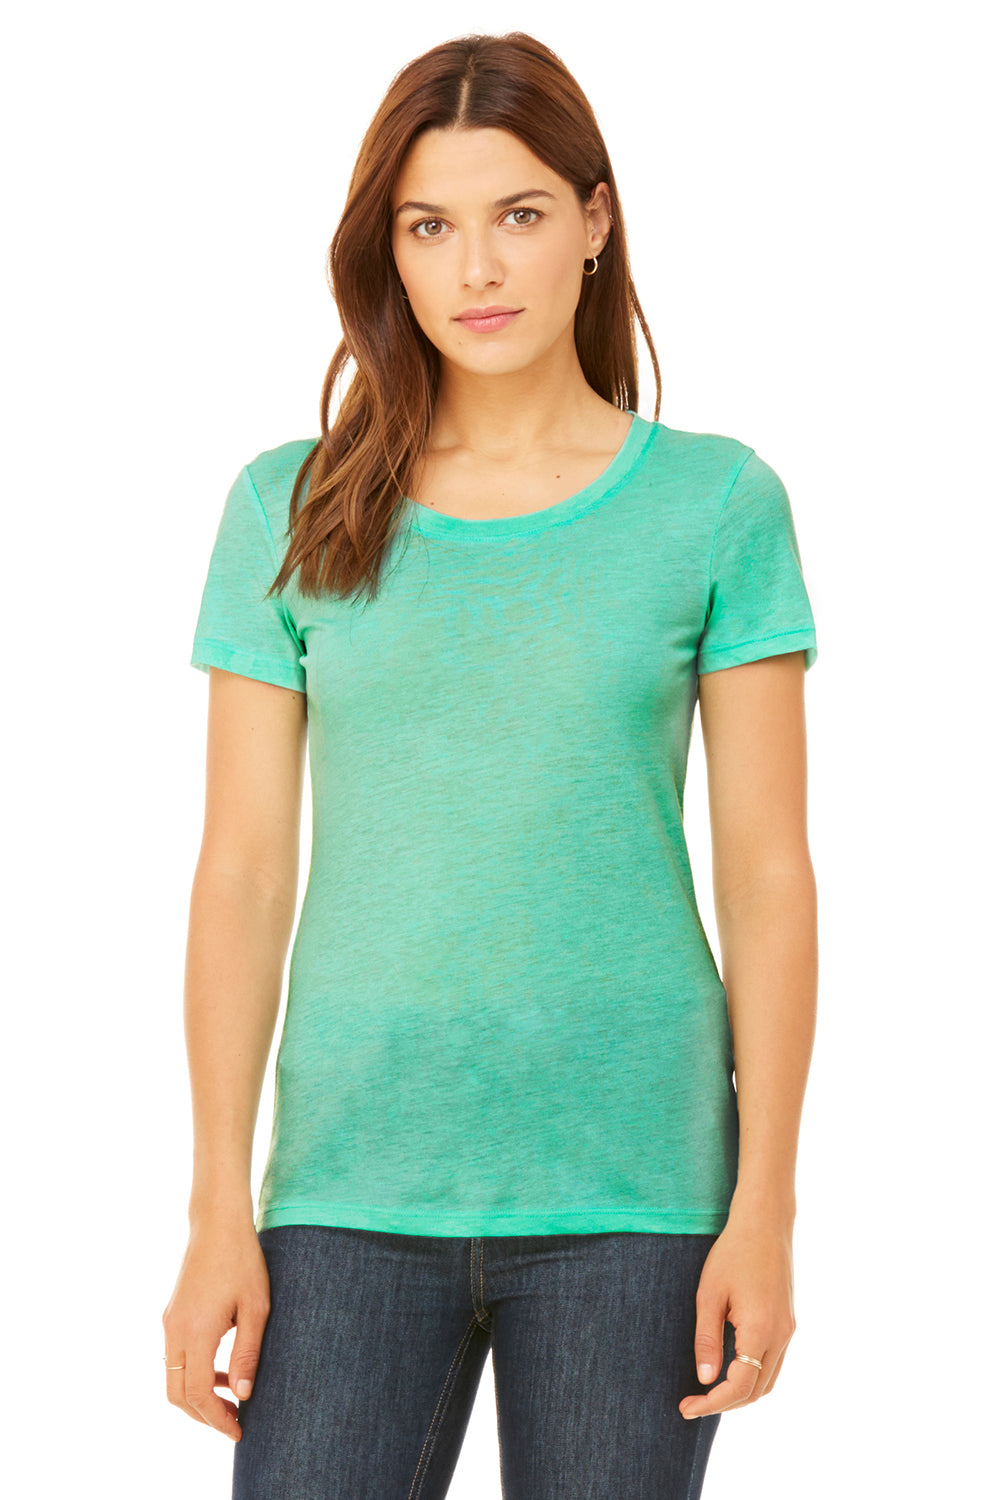 Bella + Canvas B8413 Womens Short Sleeve Crewneck T-Shirt Mint Green Front